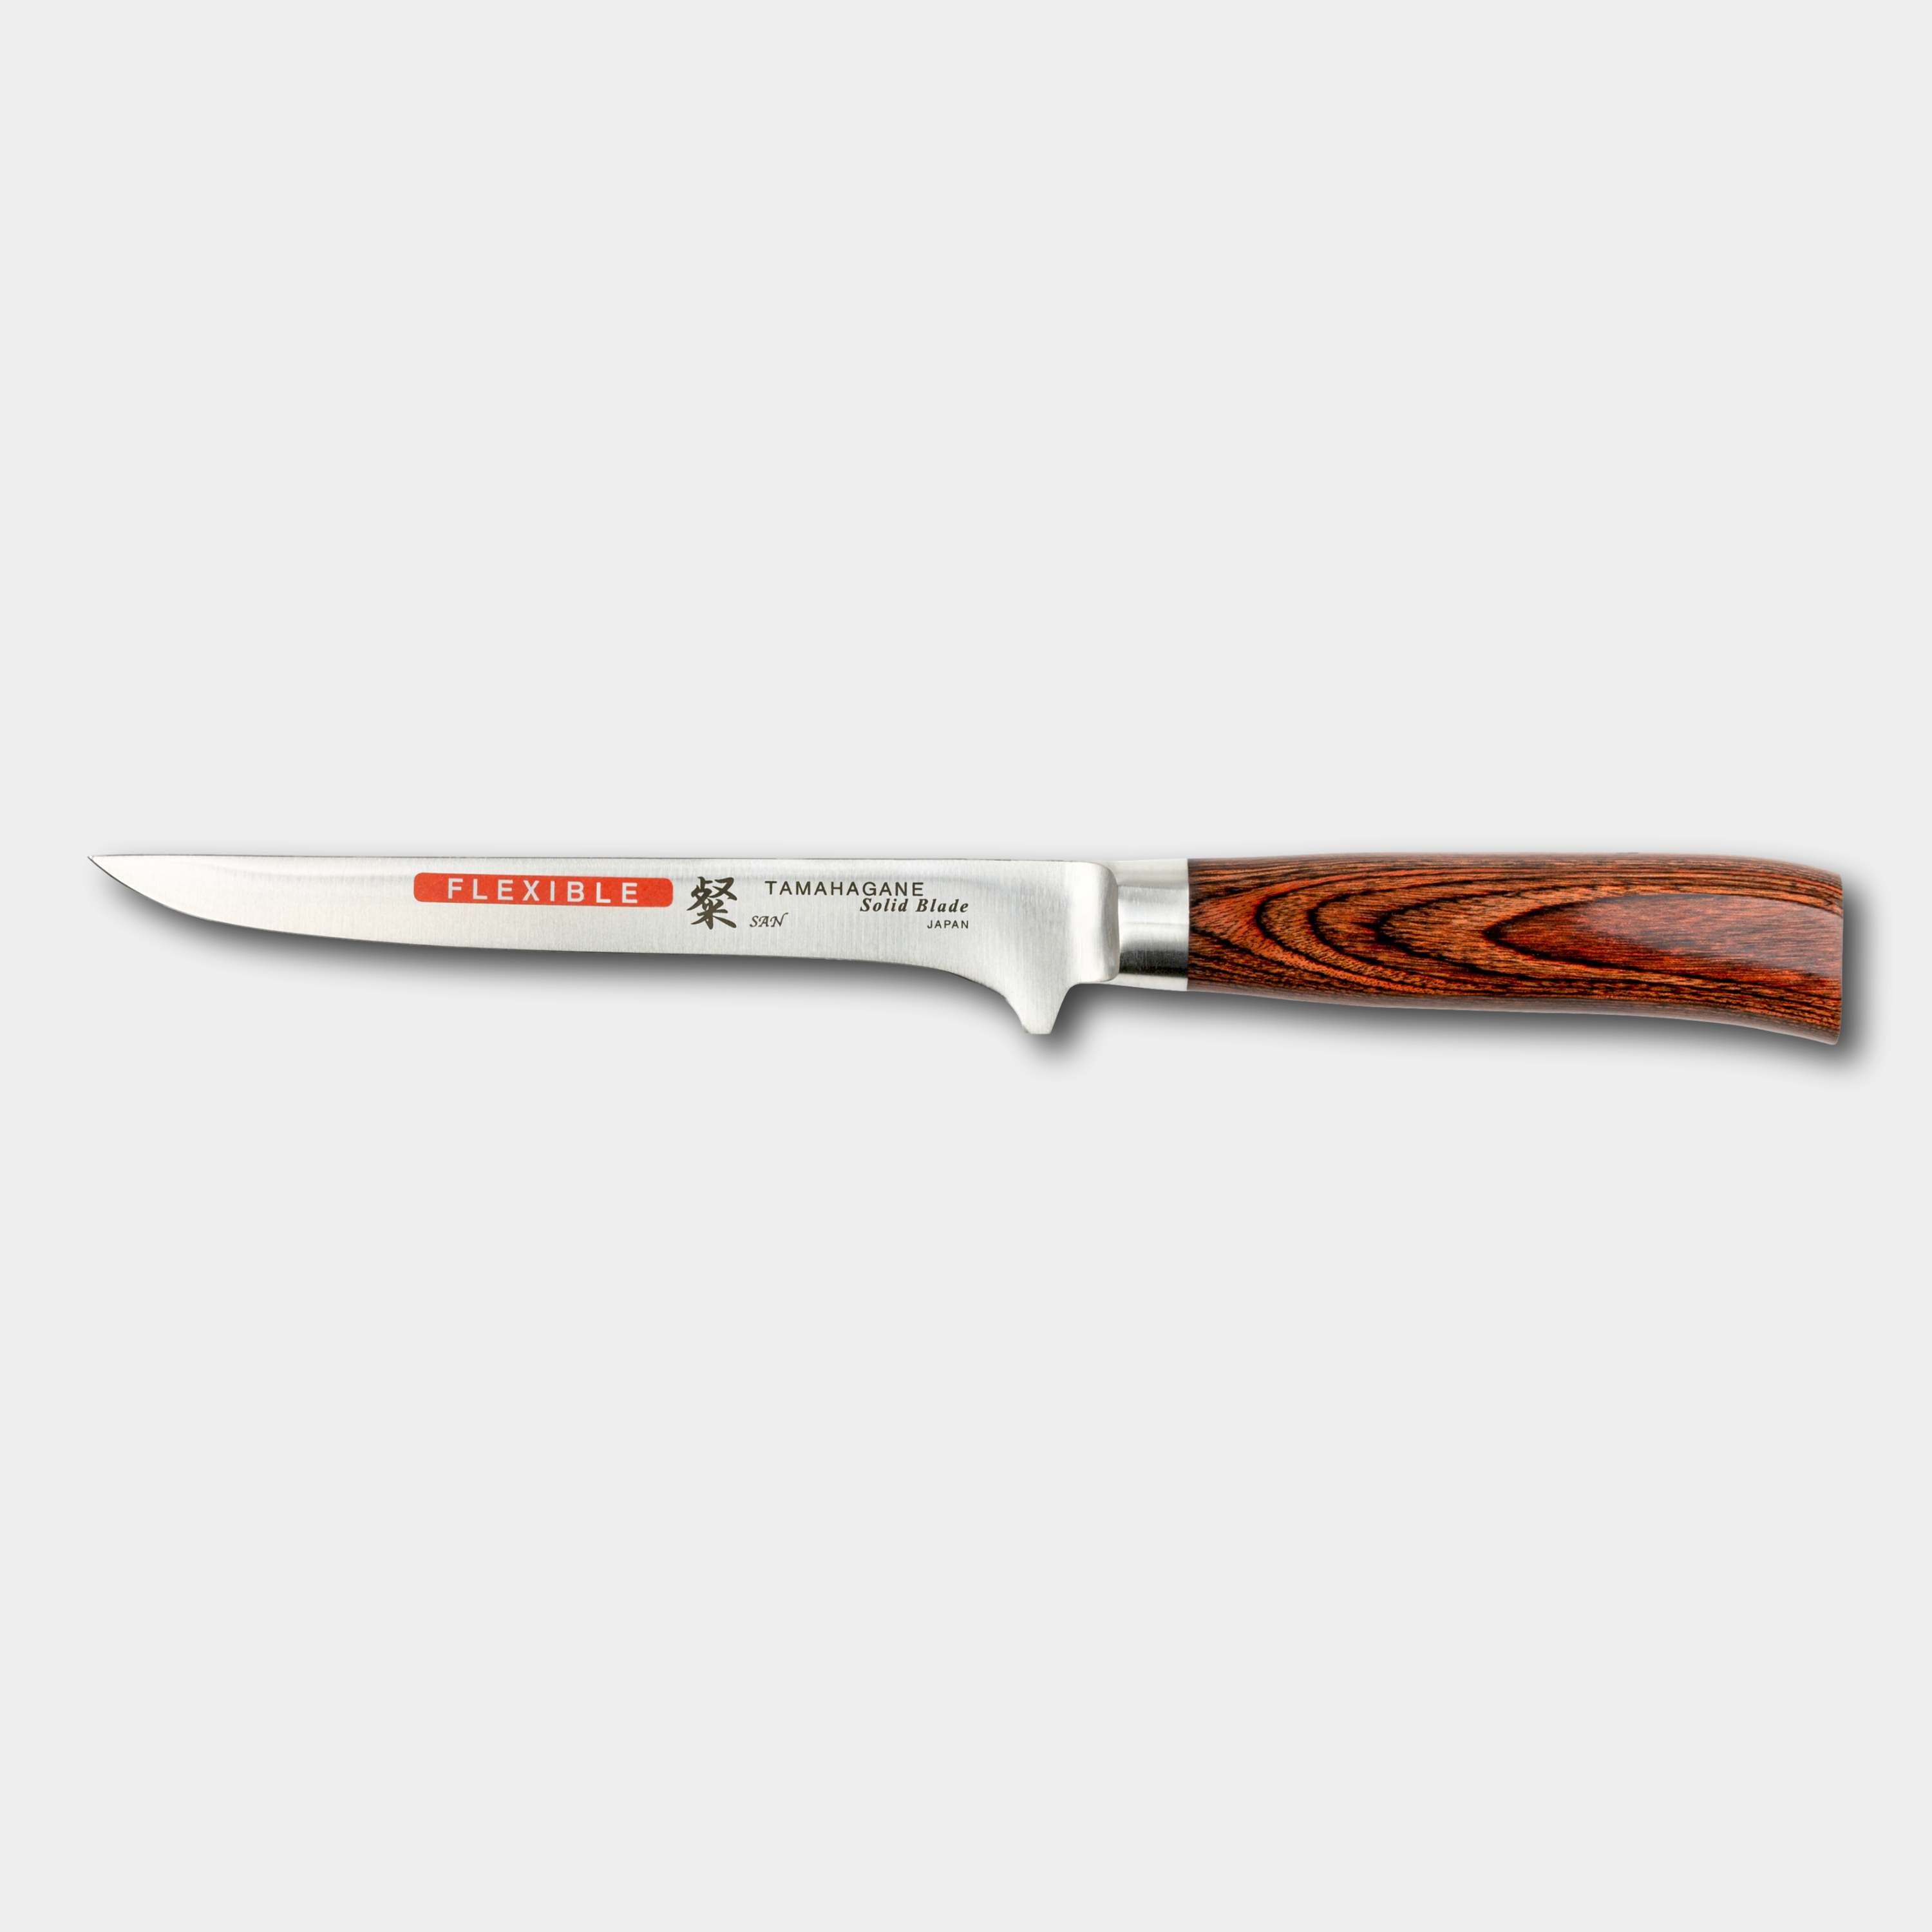 Tamahagane 16cm Flexible Boning/Filleting Knife